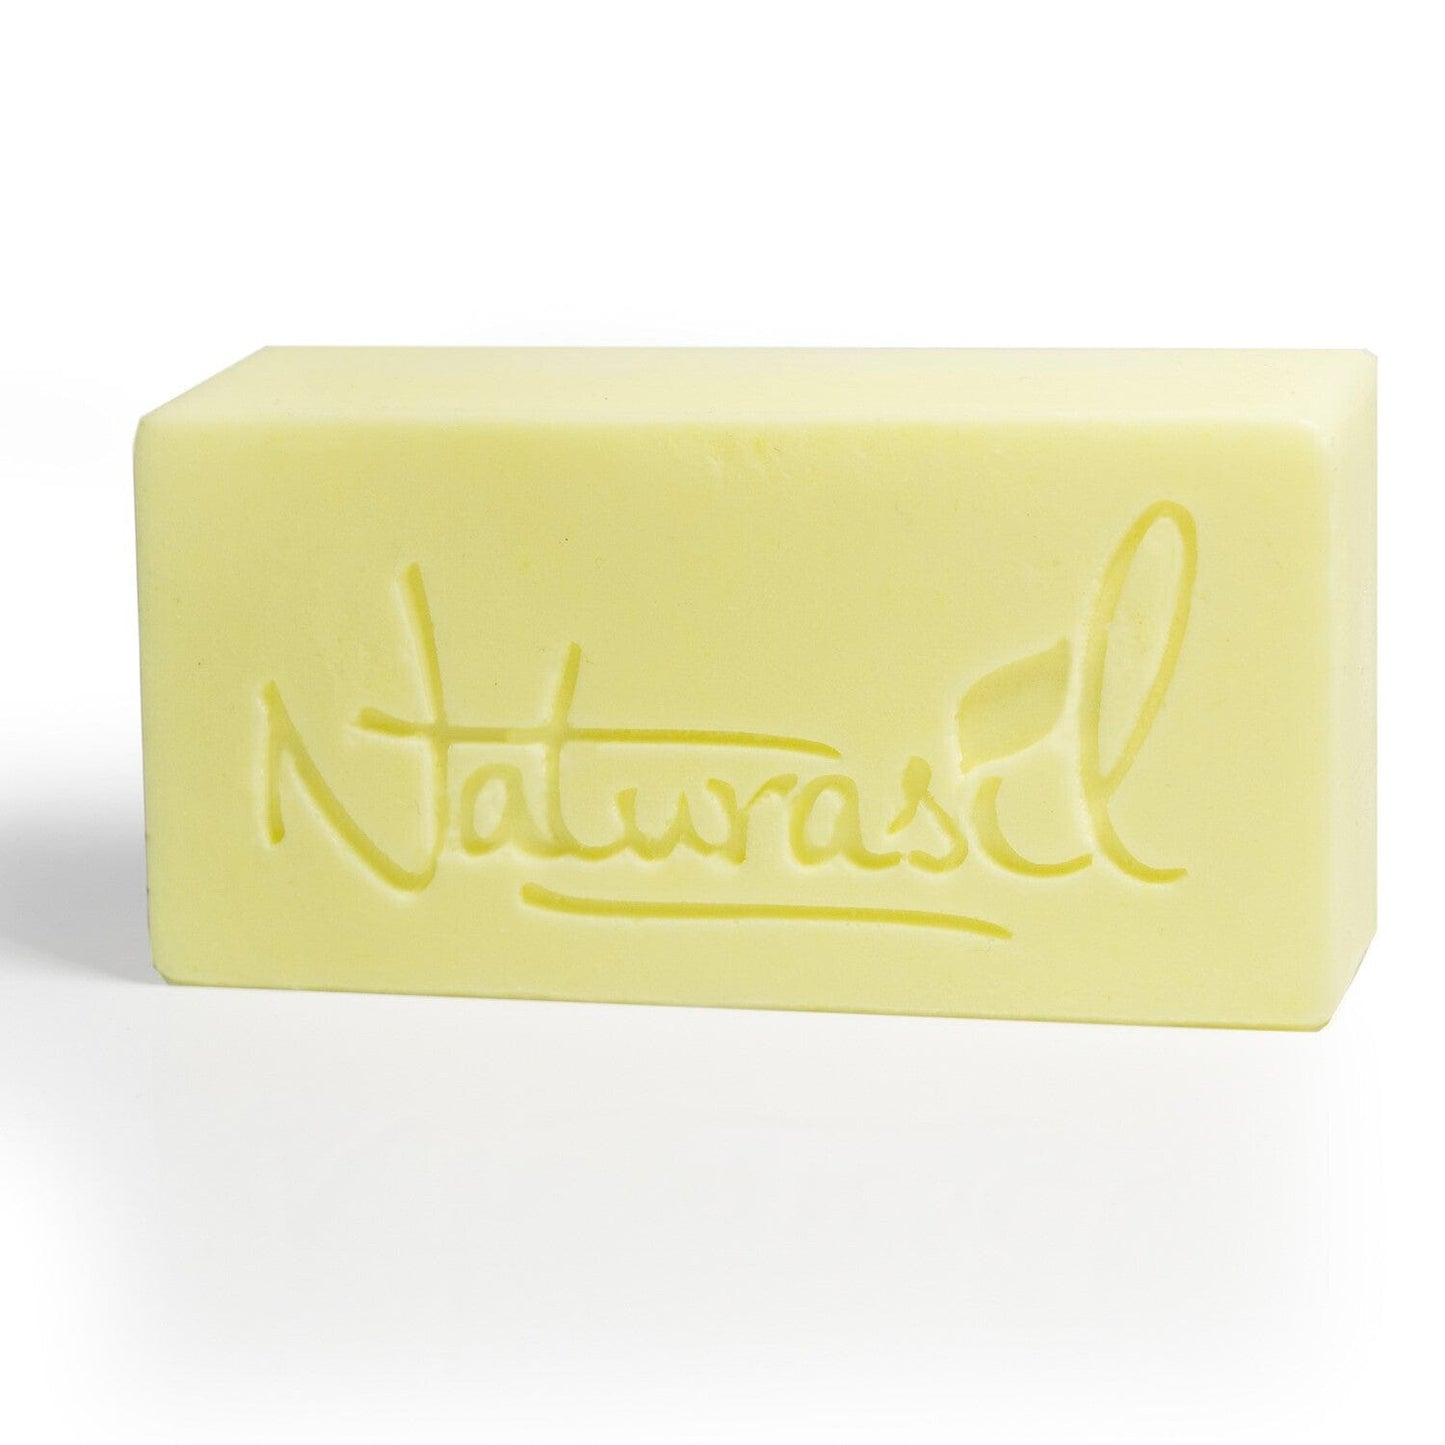 Nail Fungus Medicated 10% Sulfur Treatment Soap | 2 (4oz) Bar Pack - Naturasil